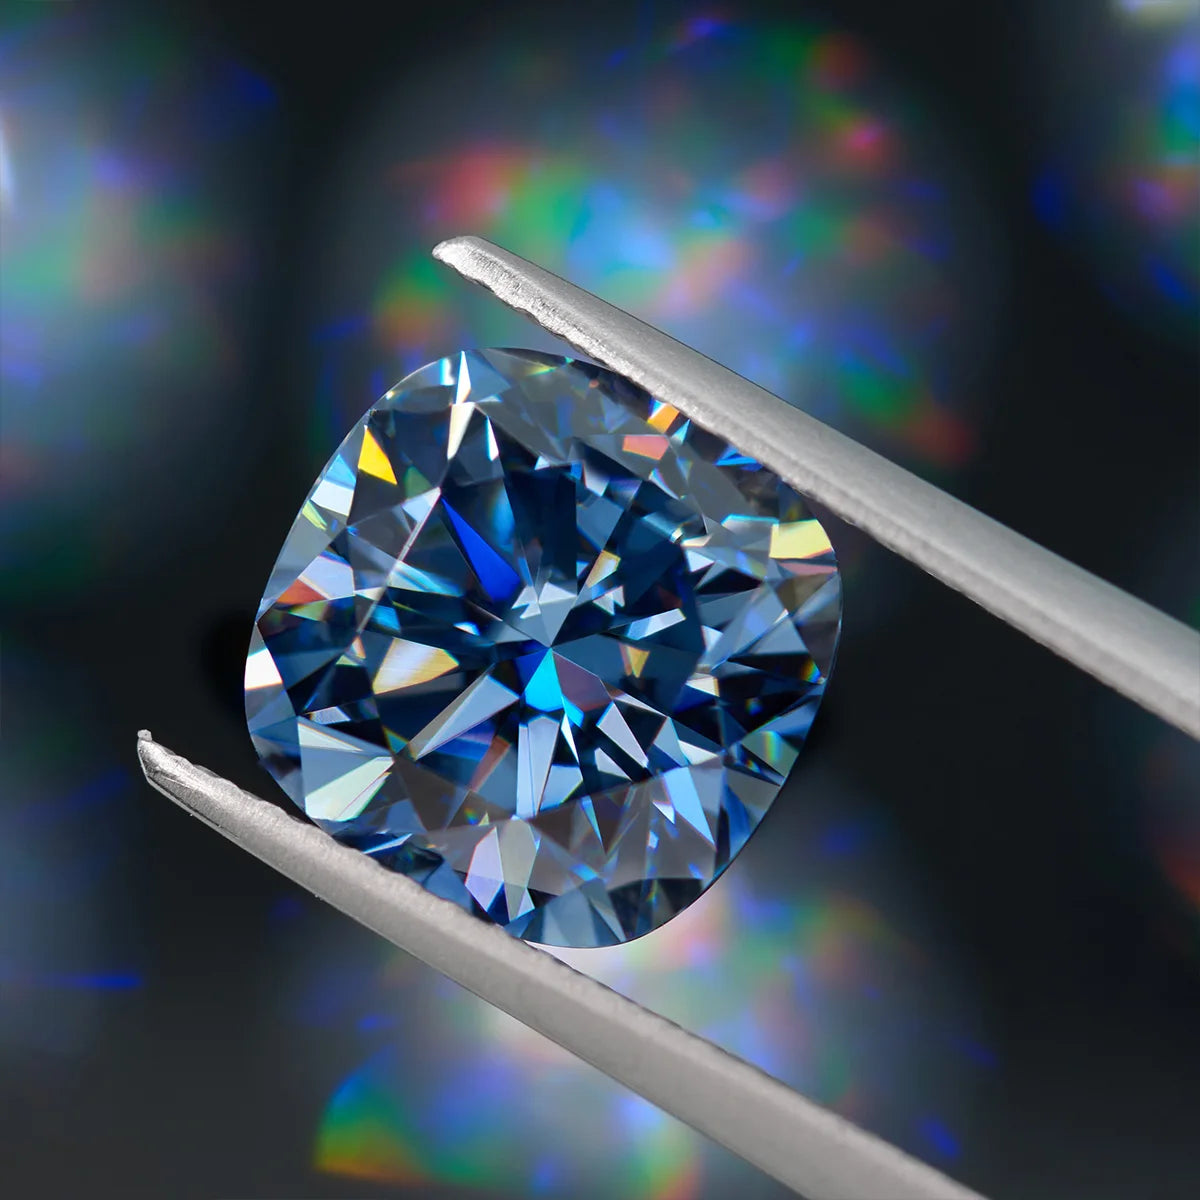 Blue Color Moissanite Gemstones. Multi Shapes. 0.50 To 8.0 Carat.